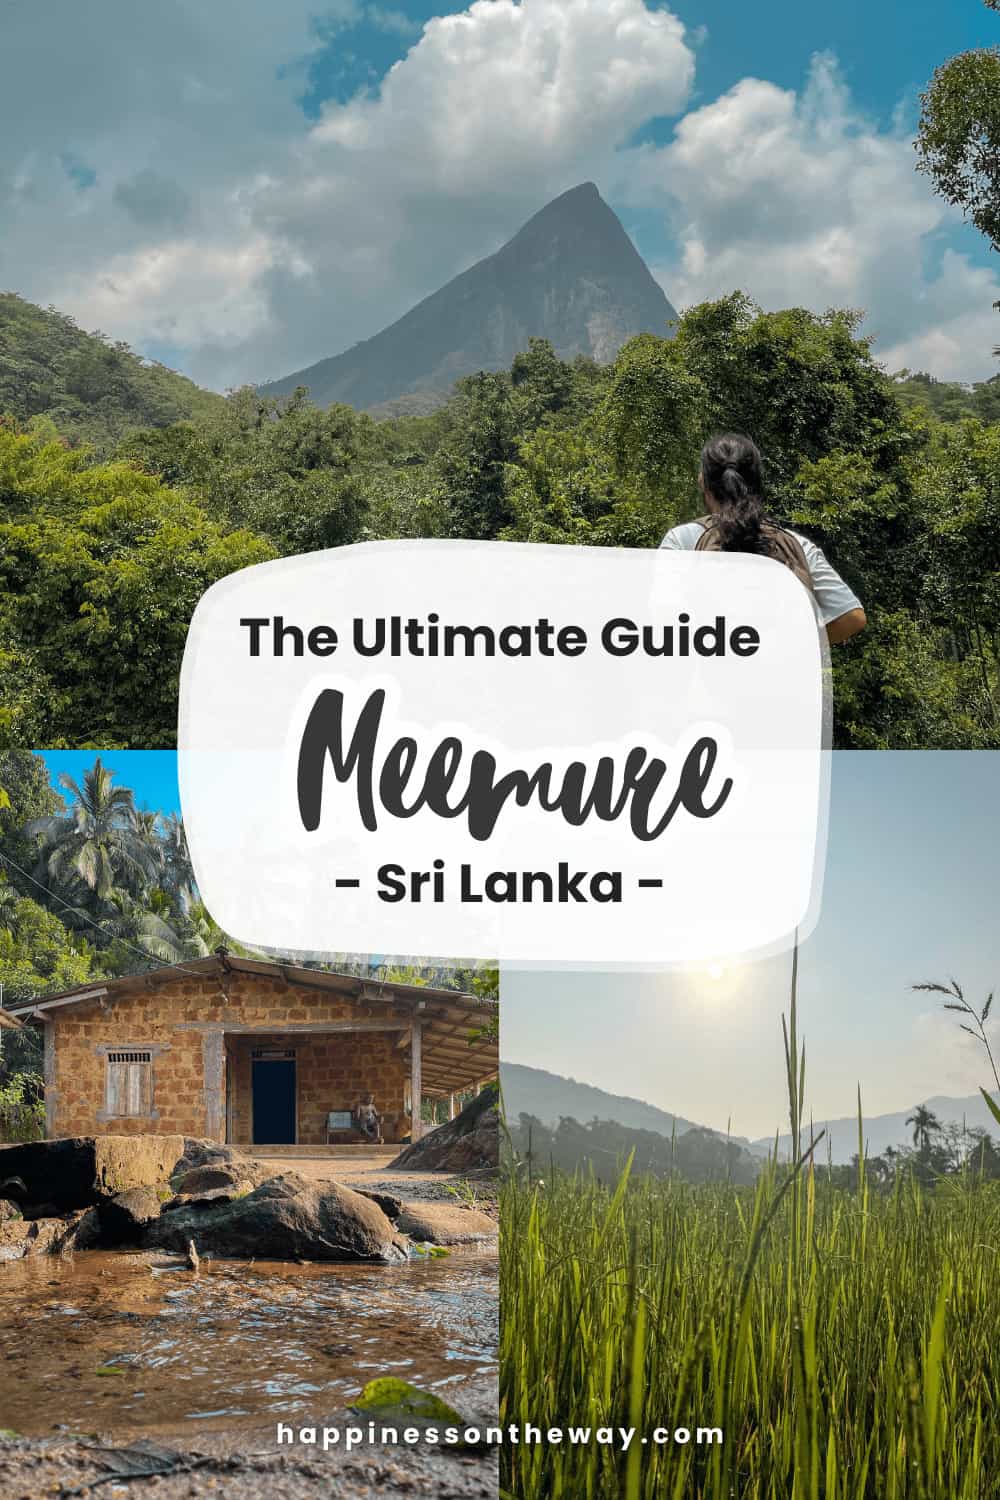 The Ultimate Guide Meemure in Sri Lanka